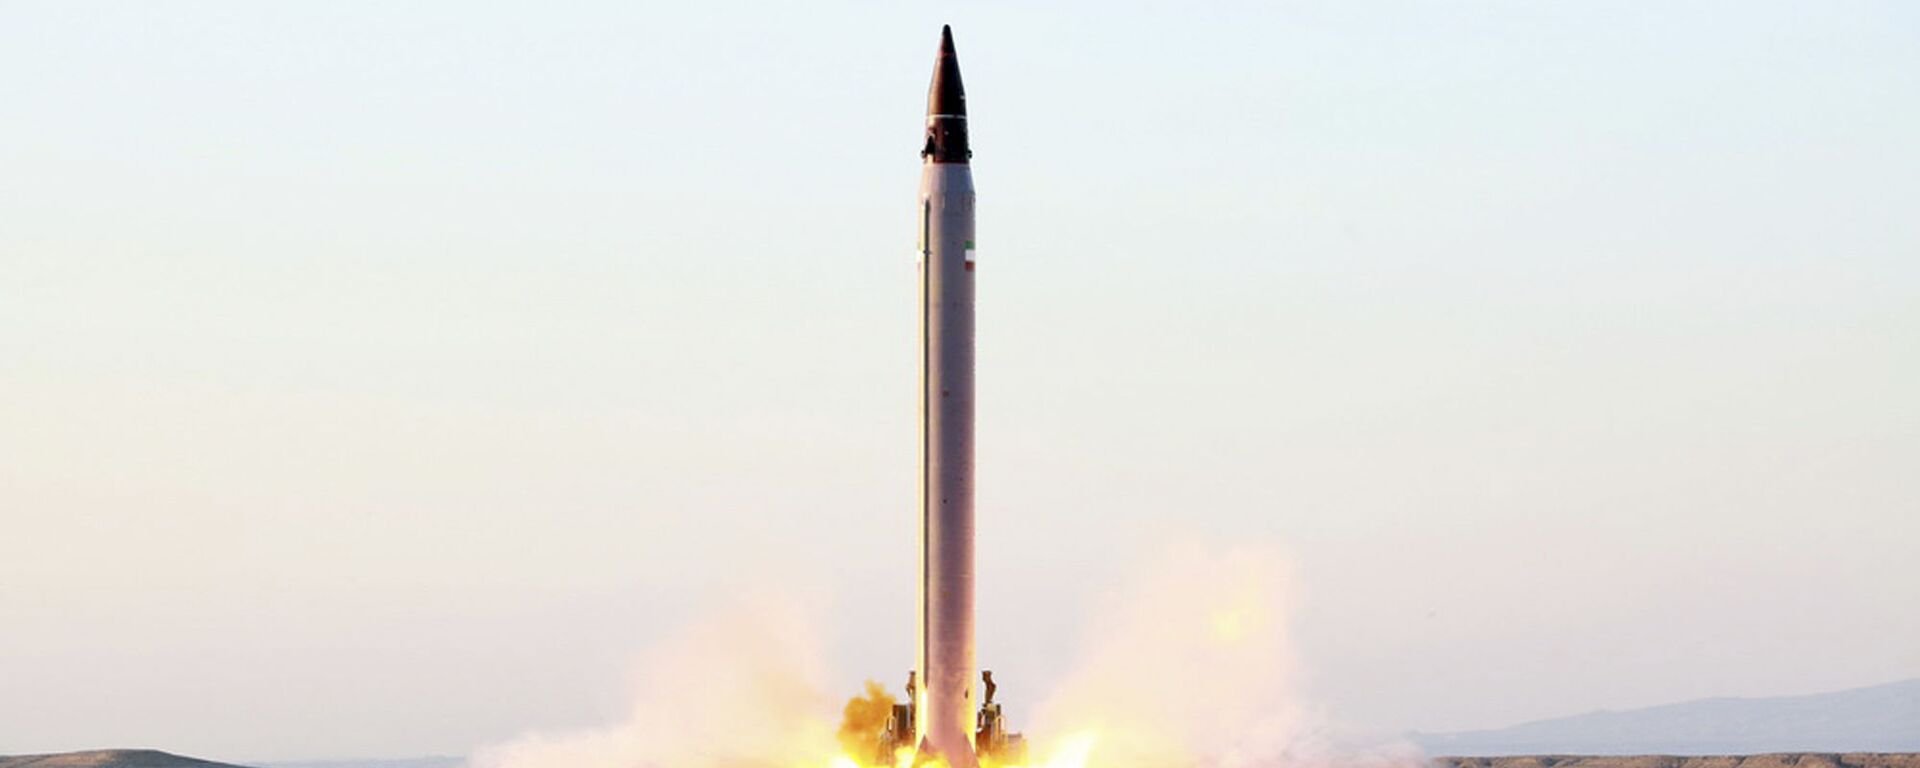 إطلاق صاروخ بالستي إيراني - سبوتنيك عربي, 1920, 01.02.2021